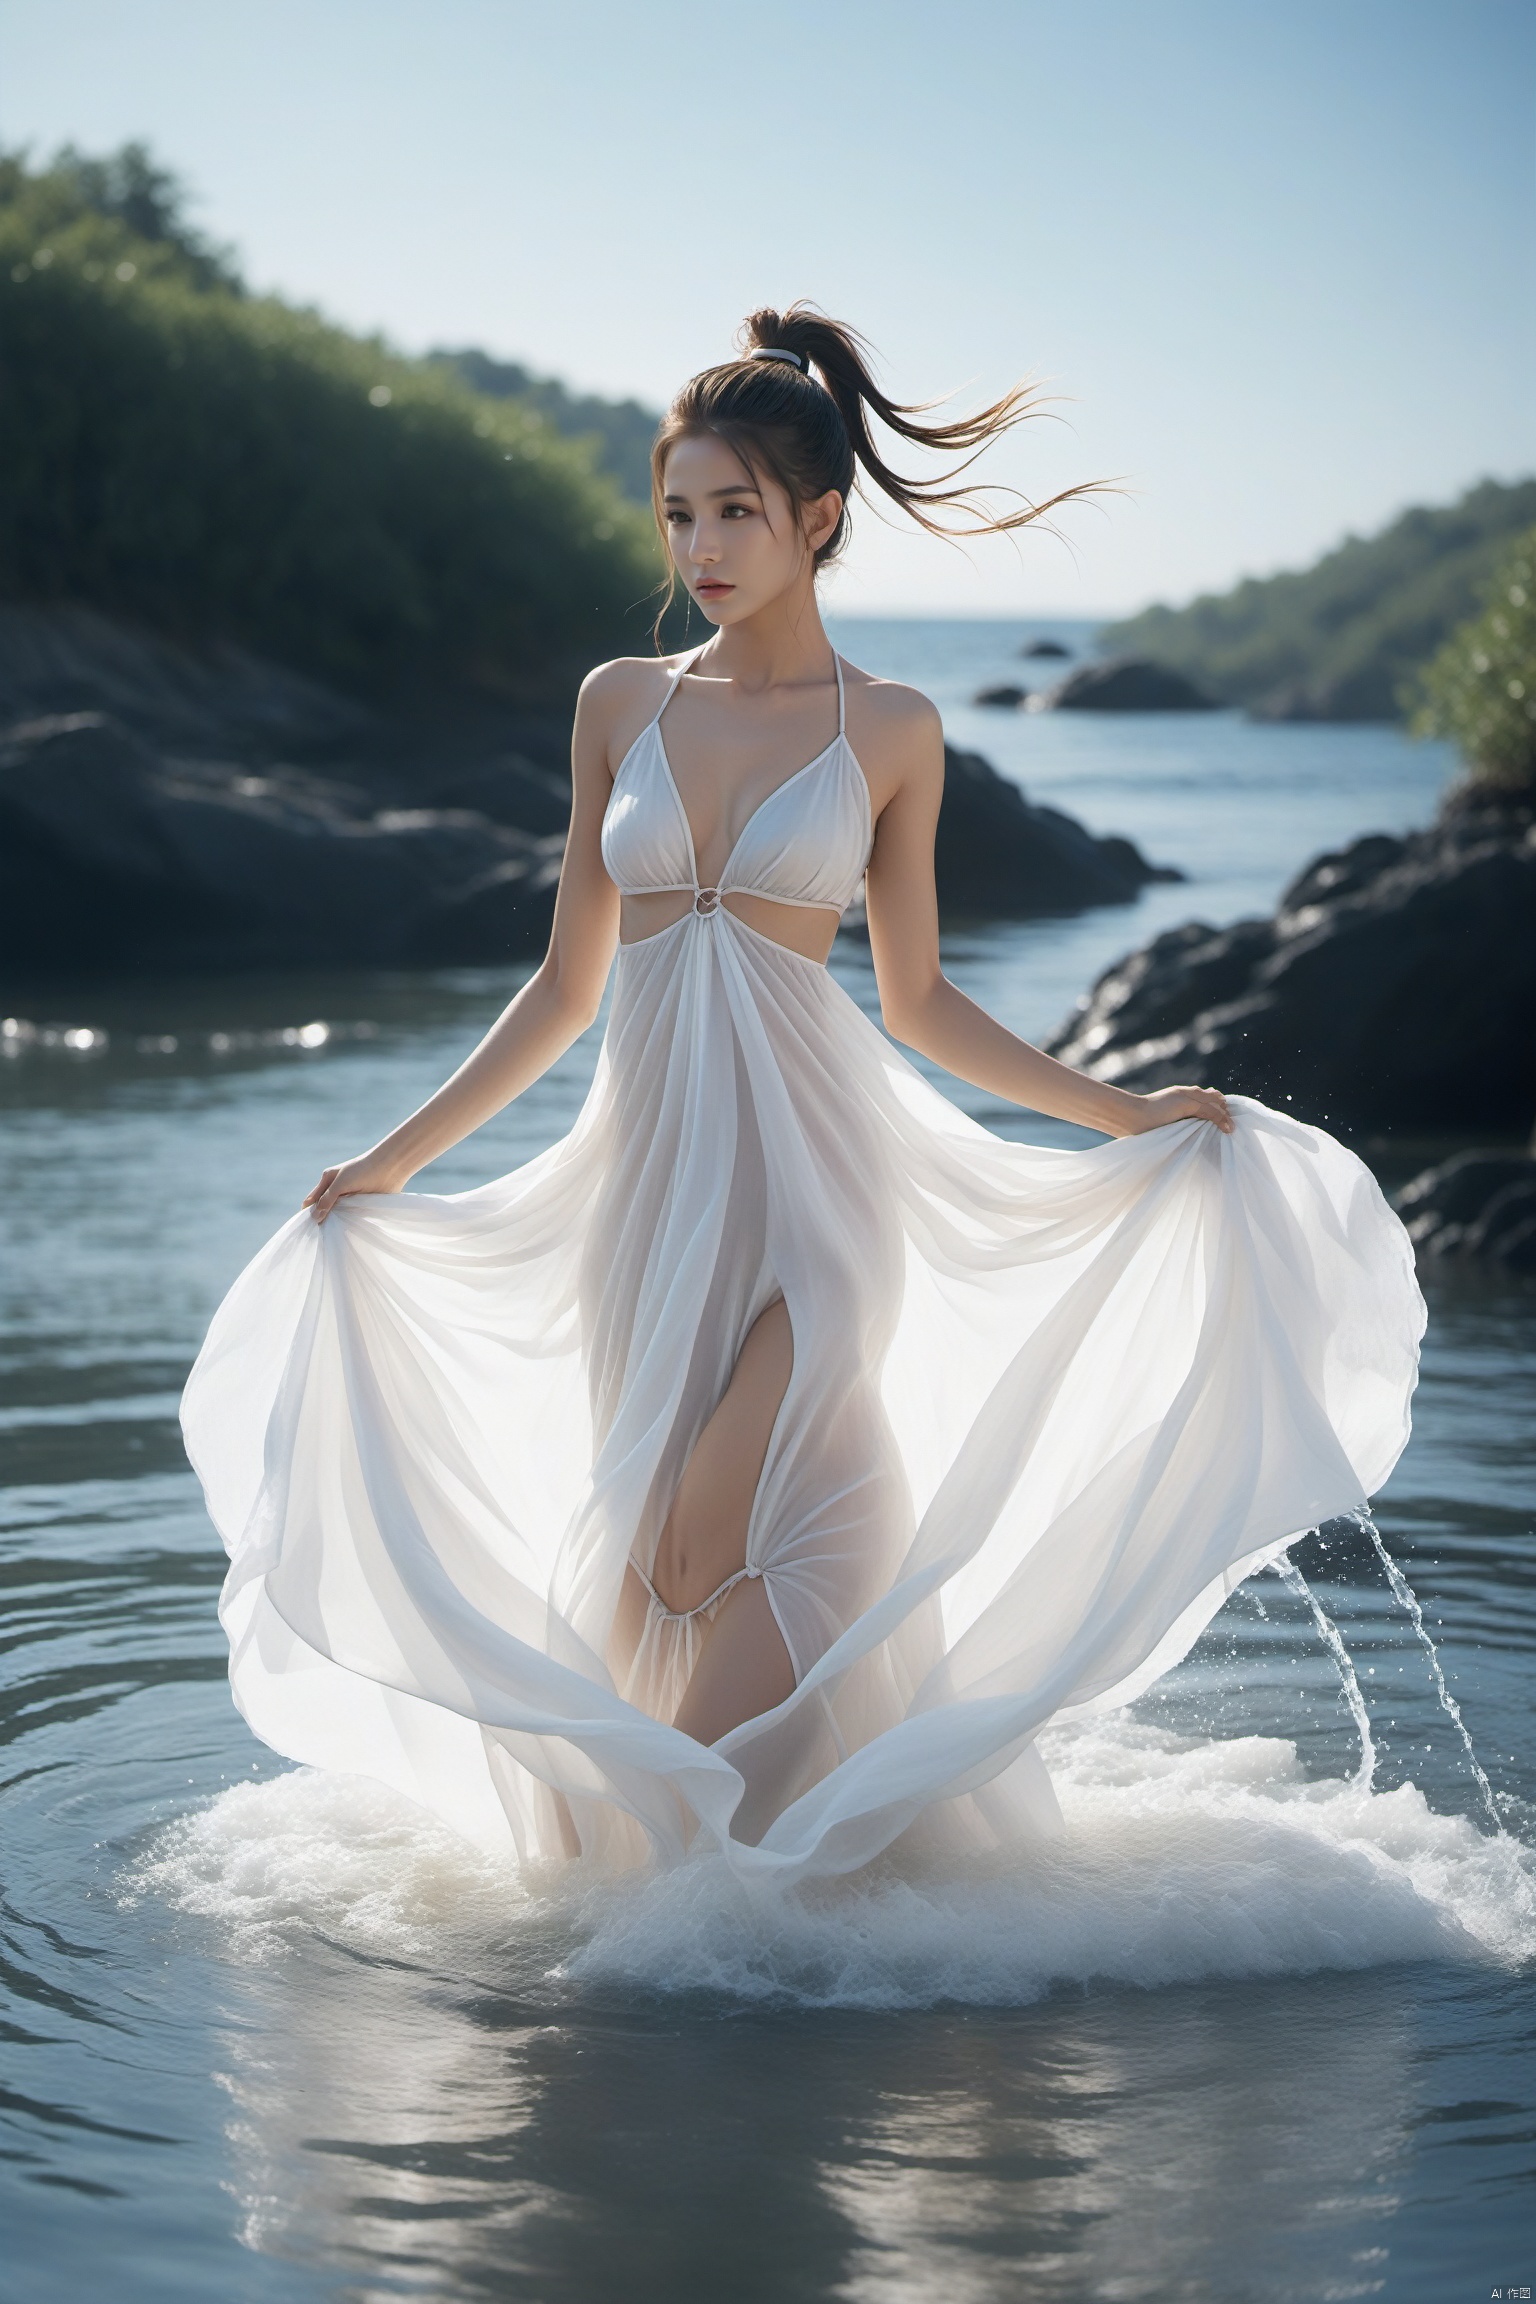  High quality,masterpiece,wallpaper,A beautiful woman is surrounded by a water ring,(translucent white gauze dress:1.3),(bikini:1.3),ponytail,walking,splashing water,fantasy, yaya